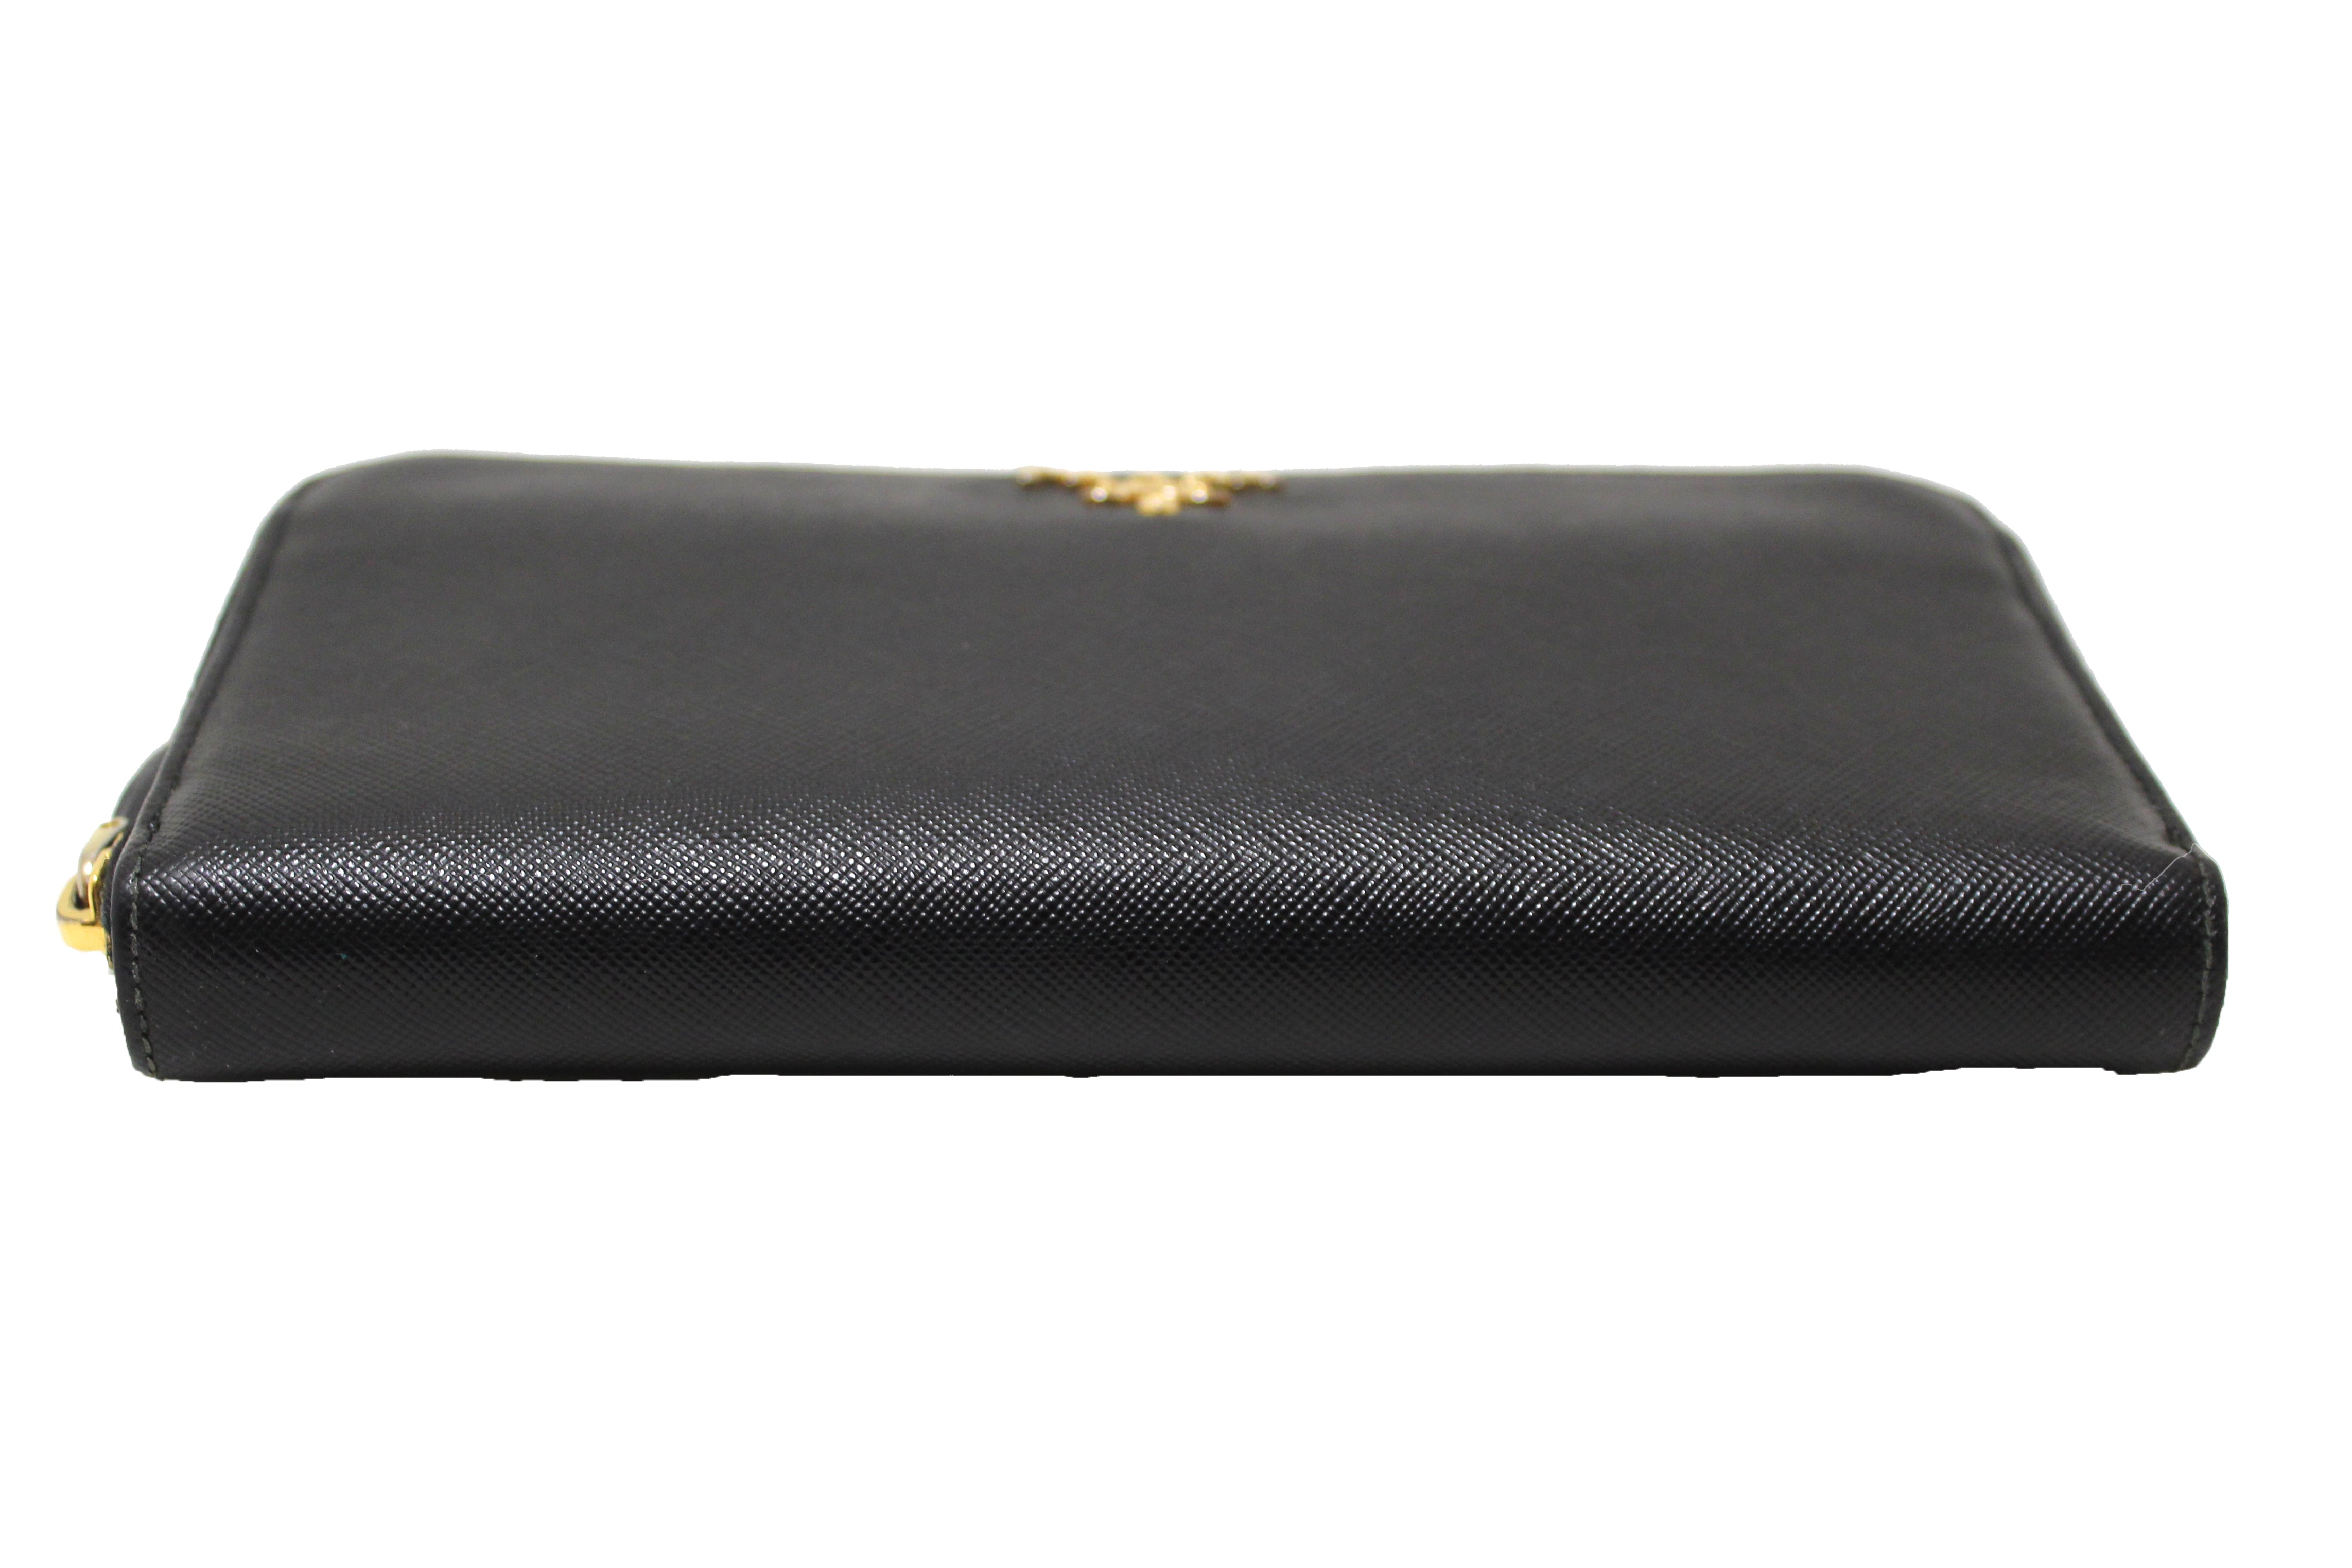 PRADA BLACK Saffiano Leather WALLET Zip Around Authentic! Missing zipper  pull!